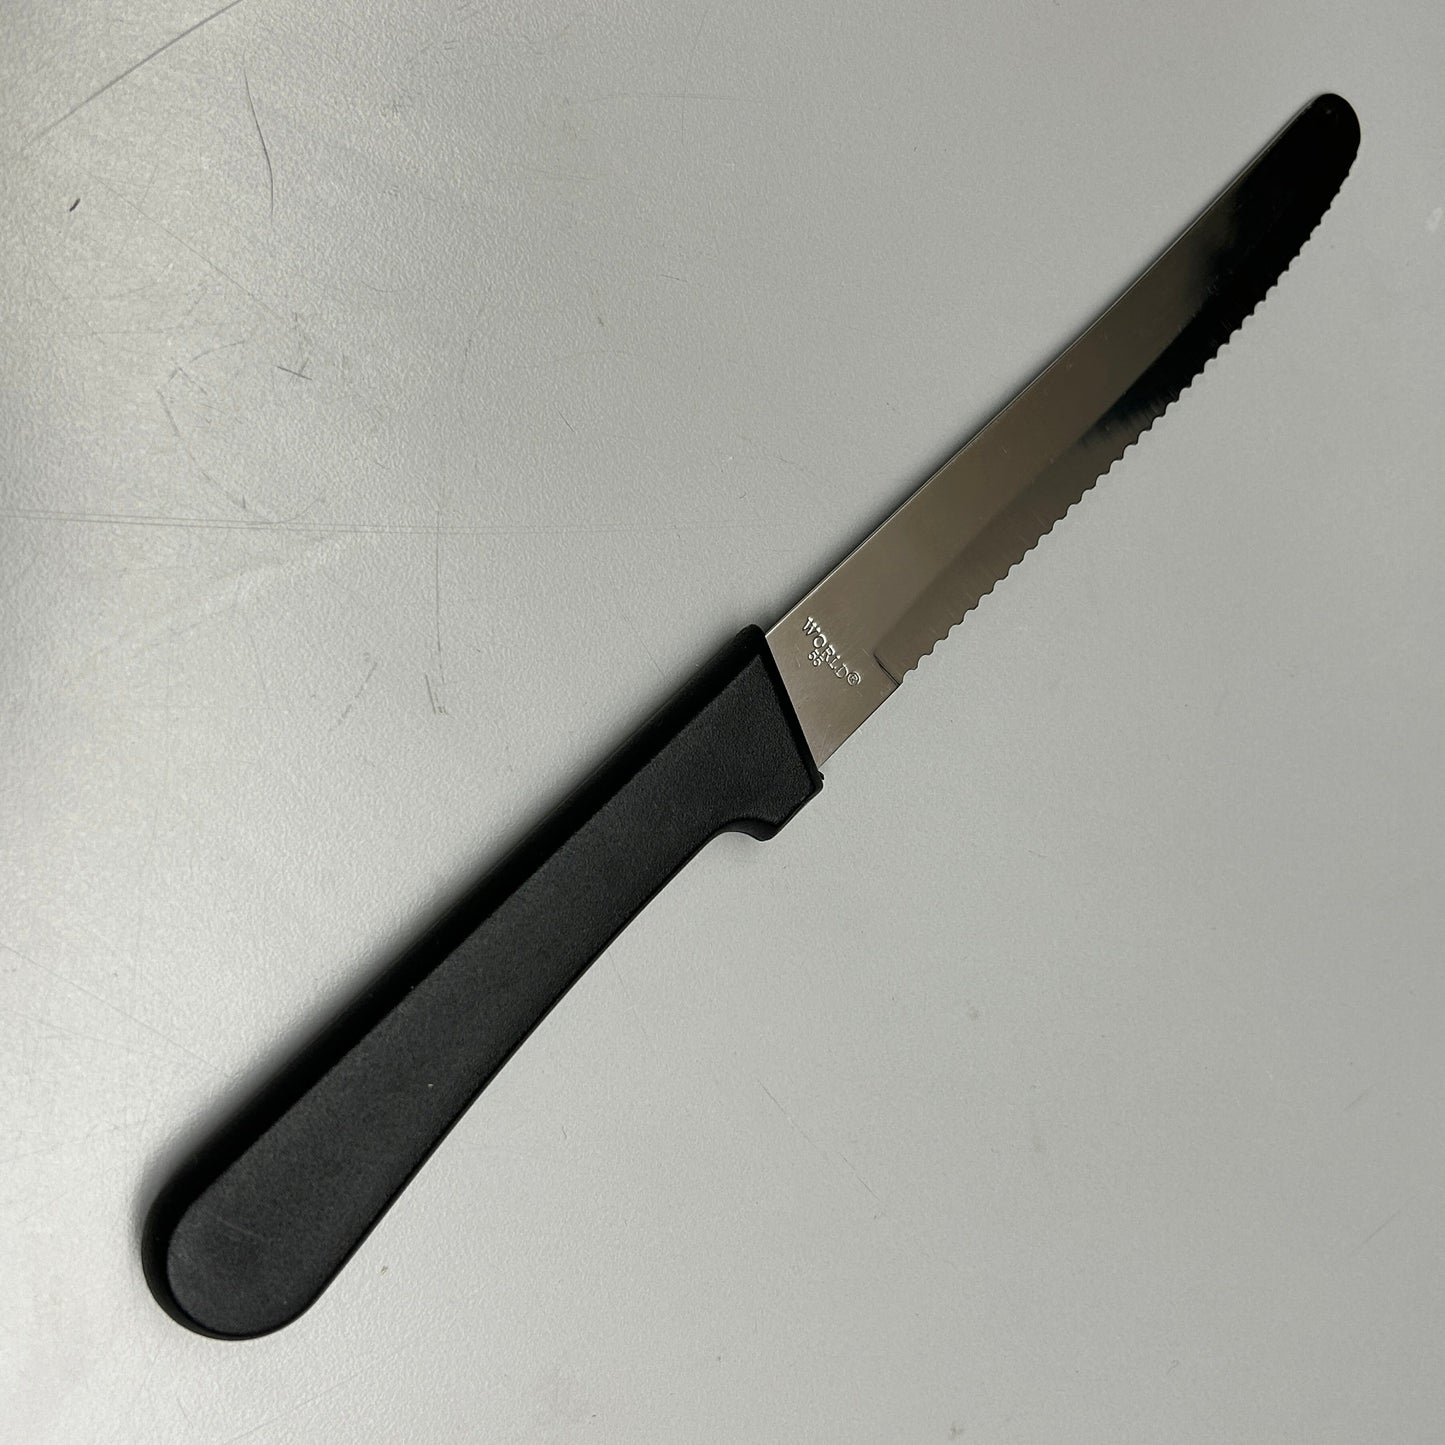 WORLD TABLEWARE 12-PCK! Plastic Handle Round Tip Steak Knives 8 3/4 Inch Black (New)